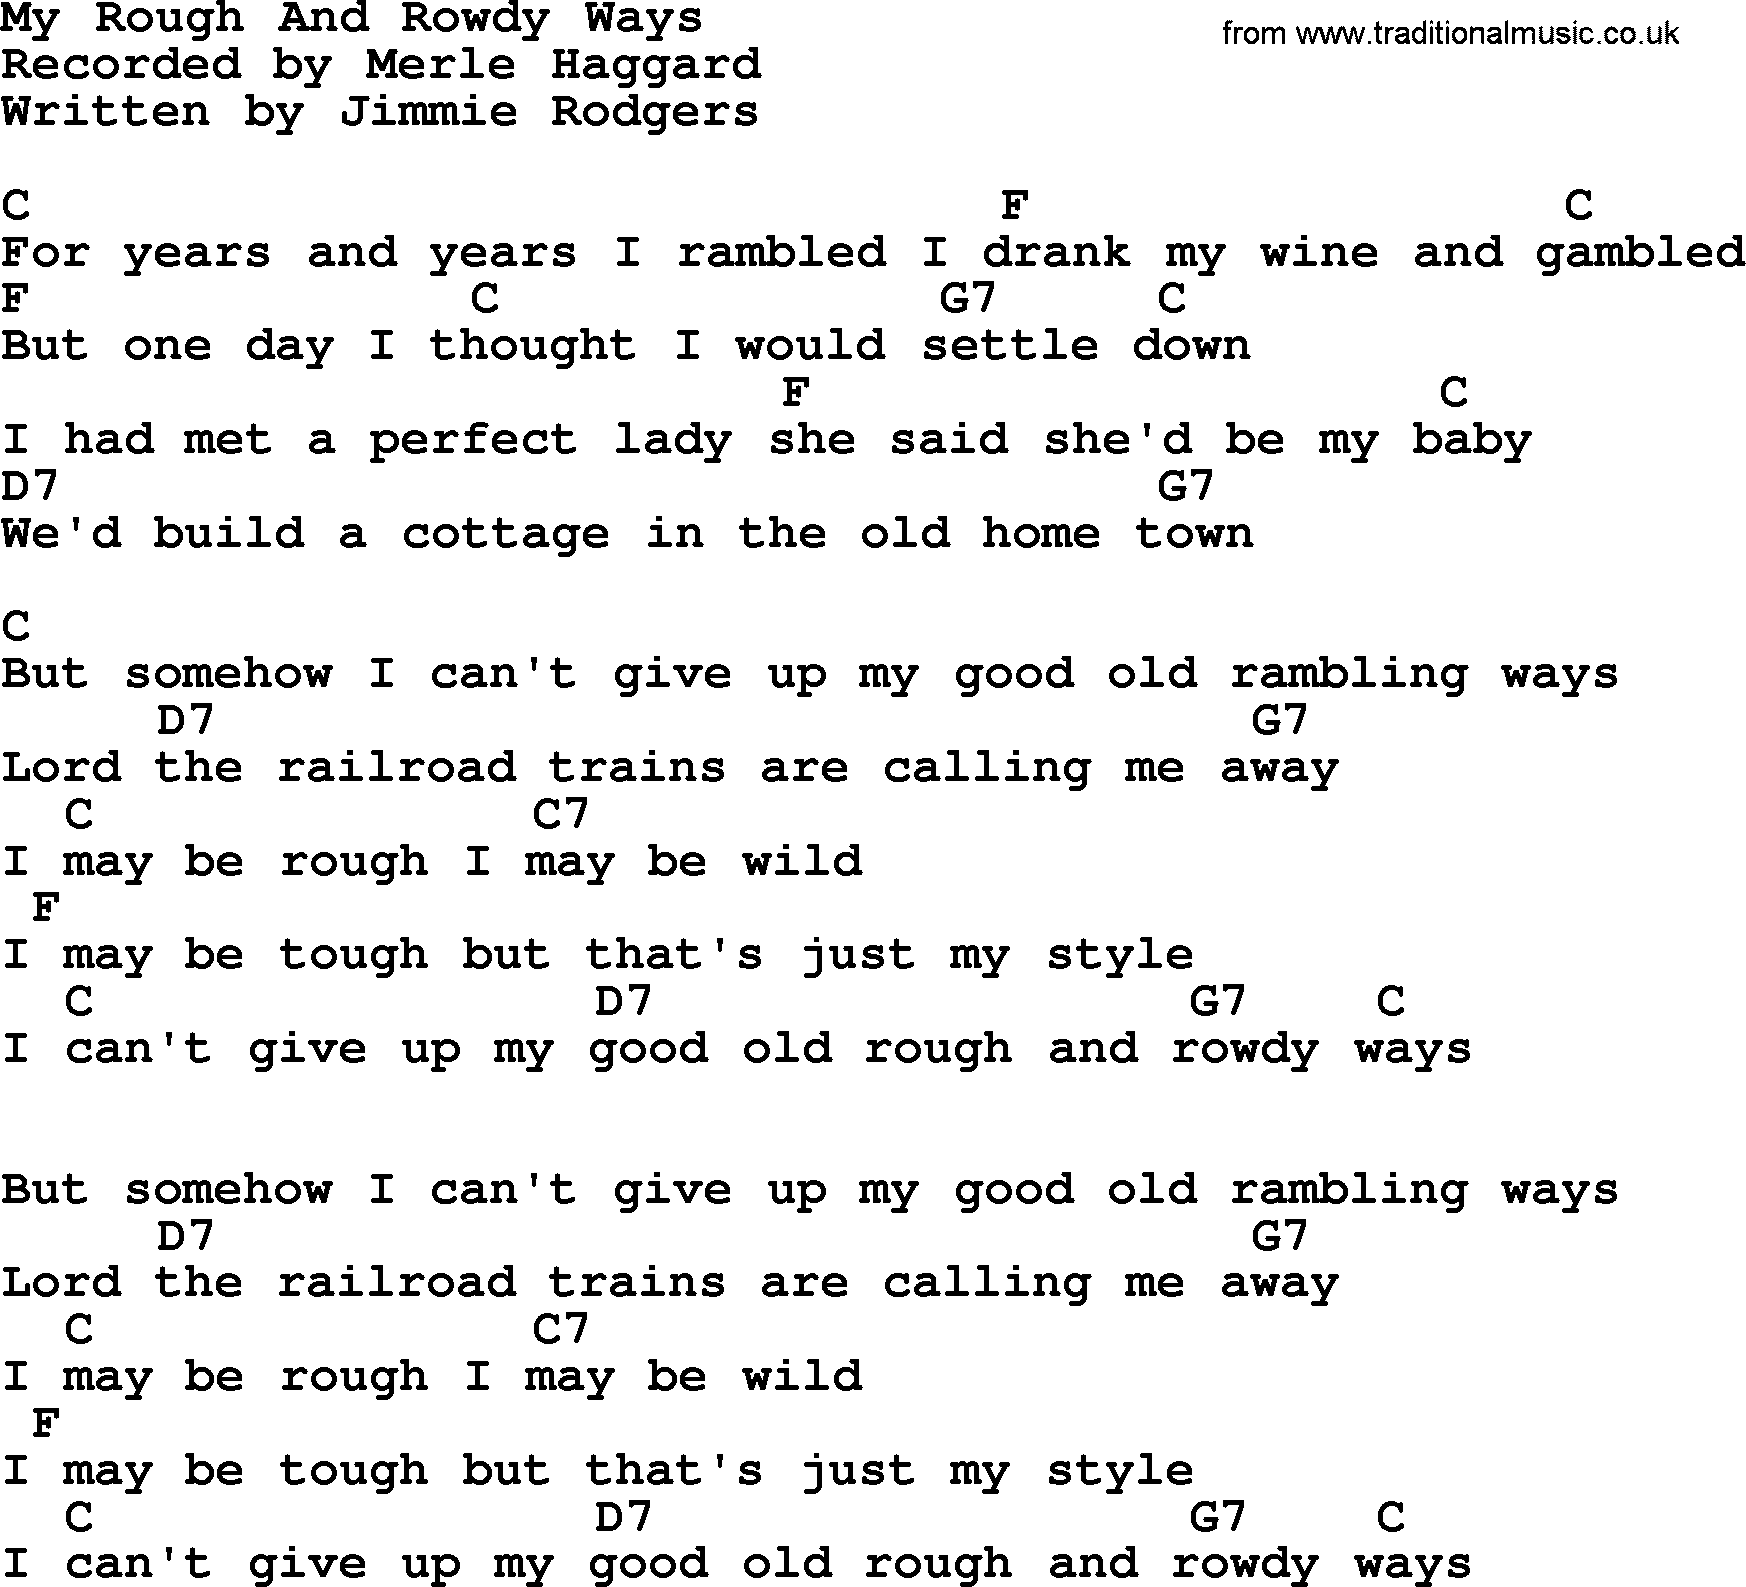 Merle Haggard song: My Rough And Rowdy Ways, lyrics and chords